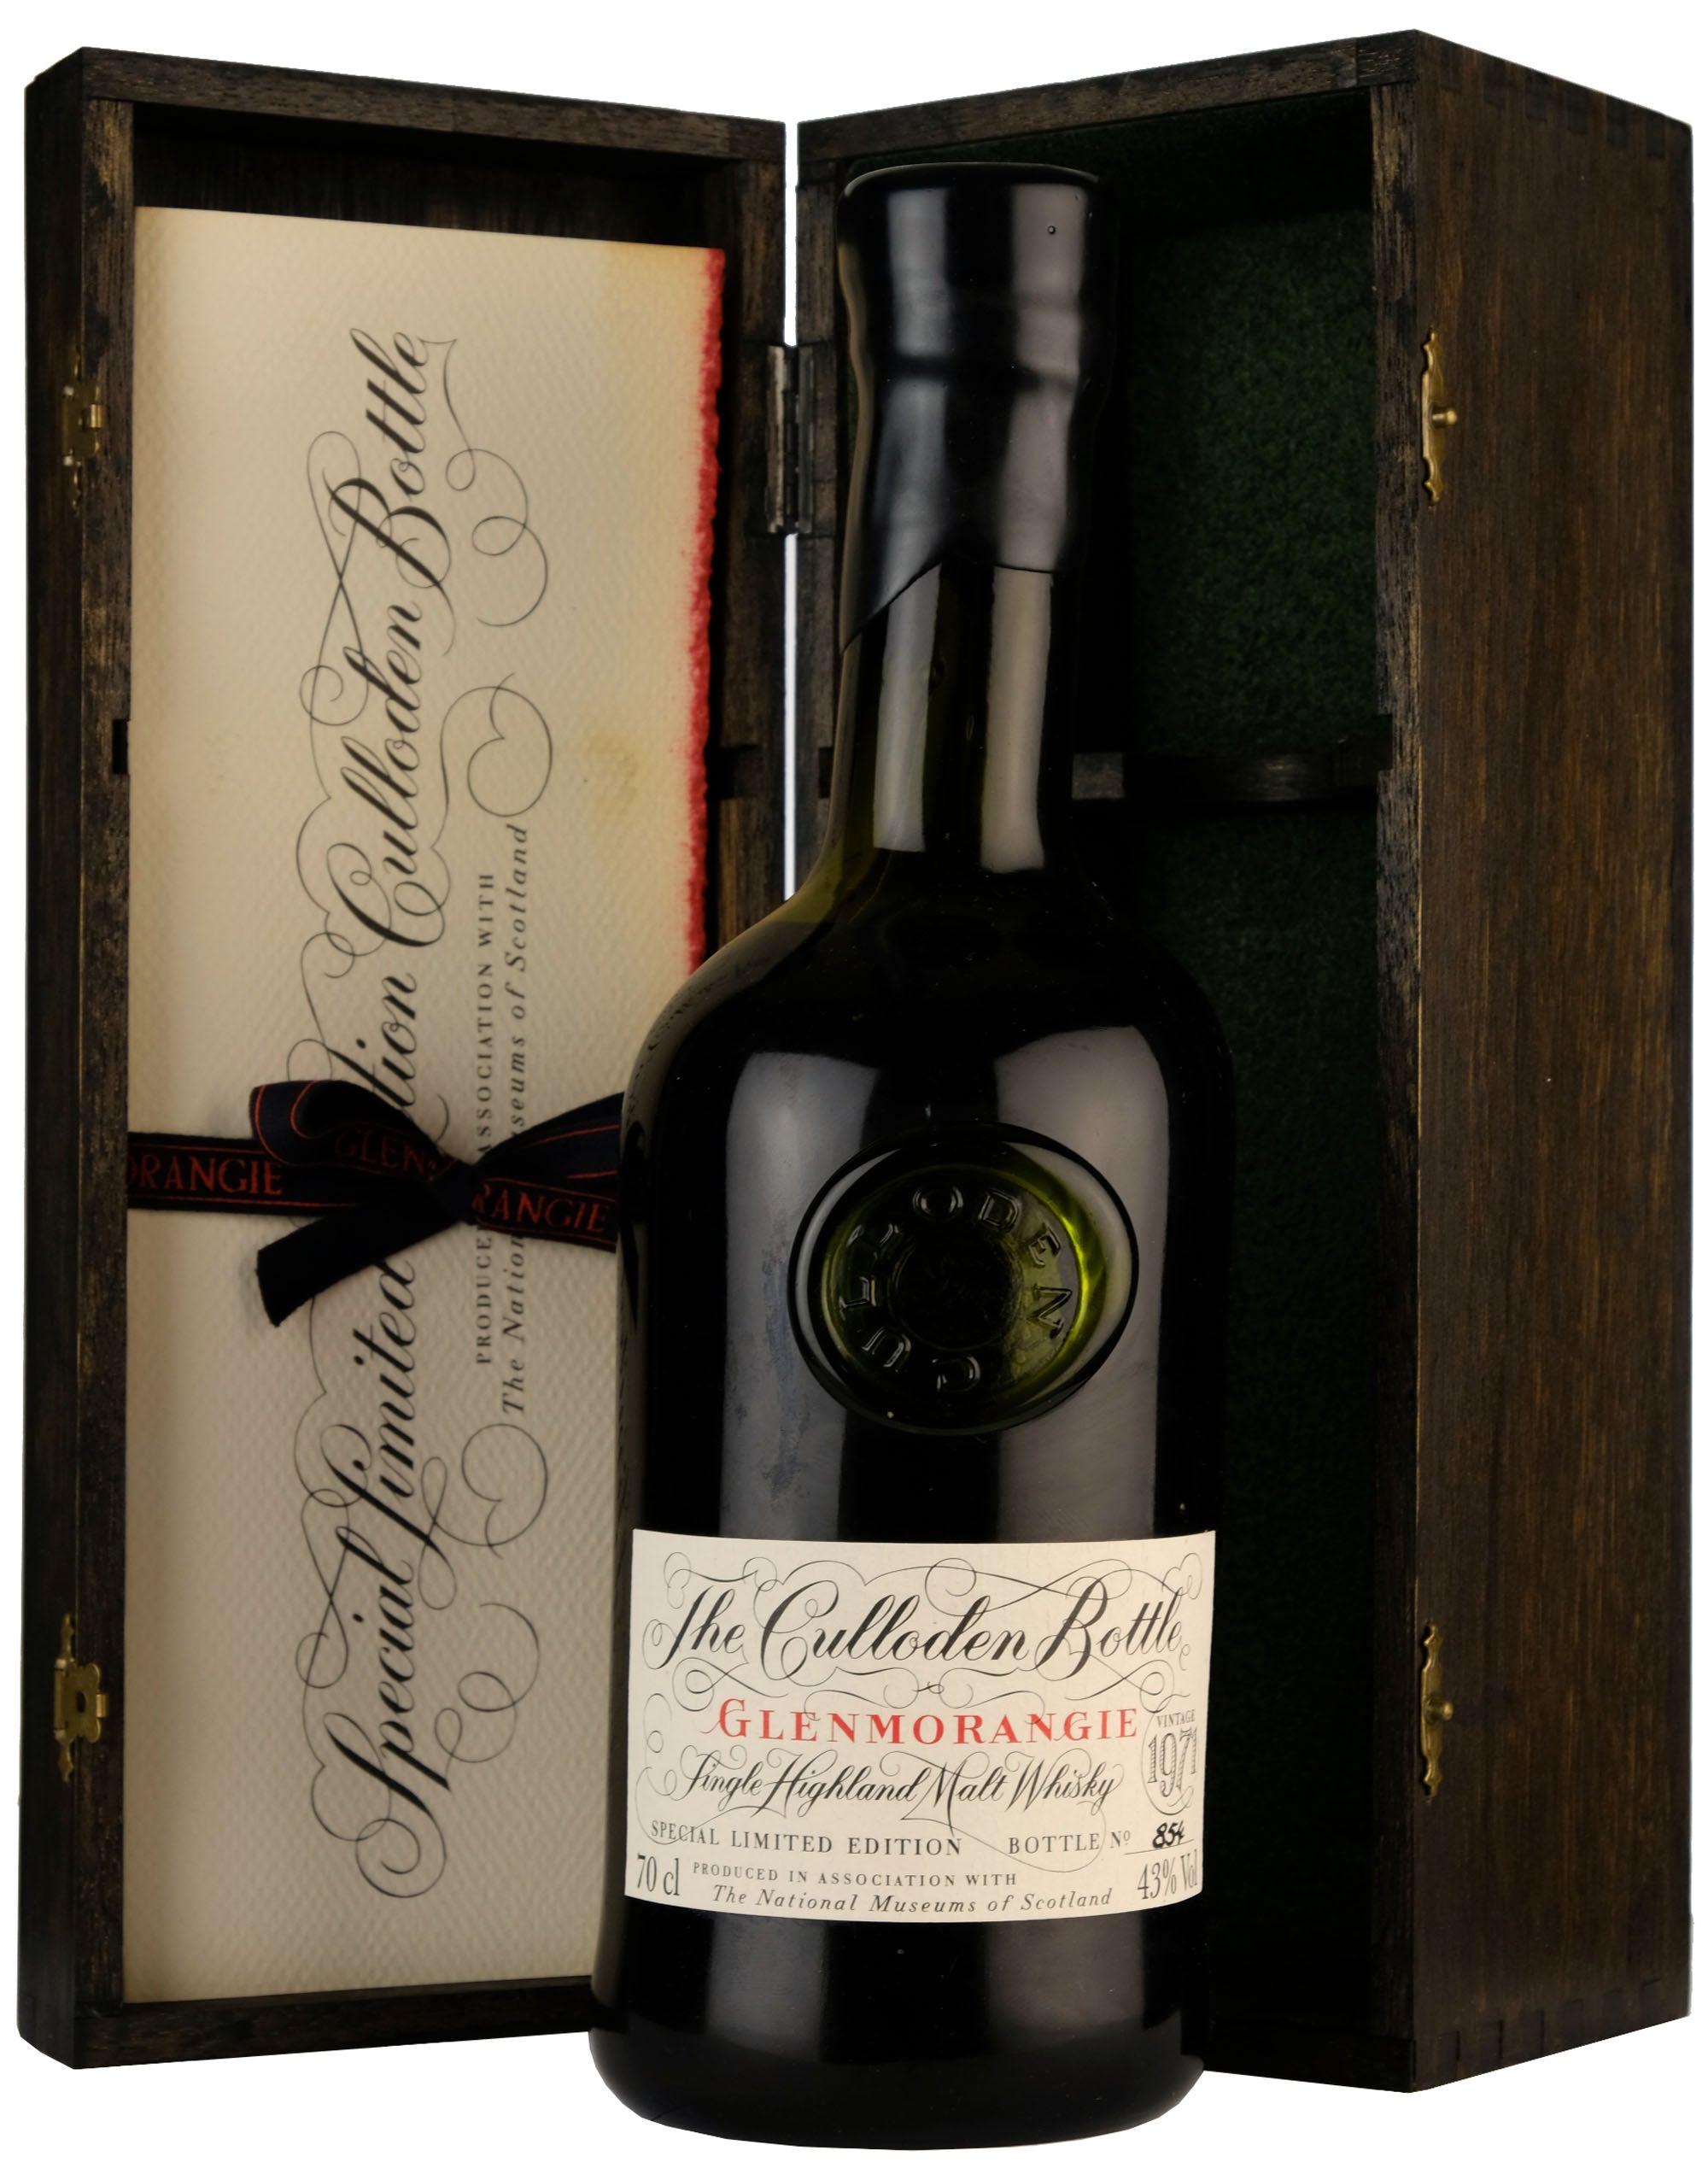 Glenmorangie 1971-1995 The Culloden Bottle